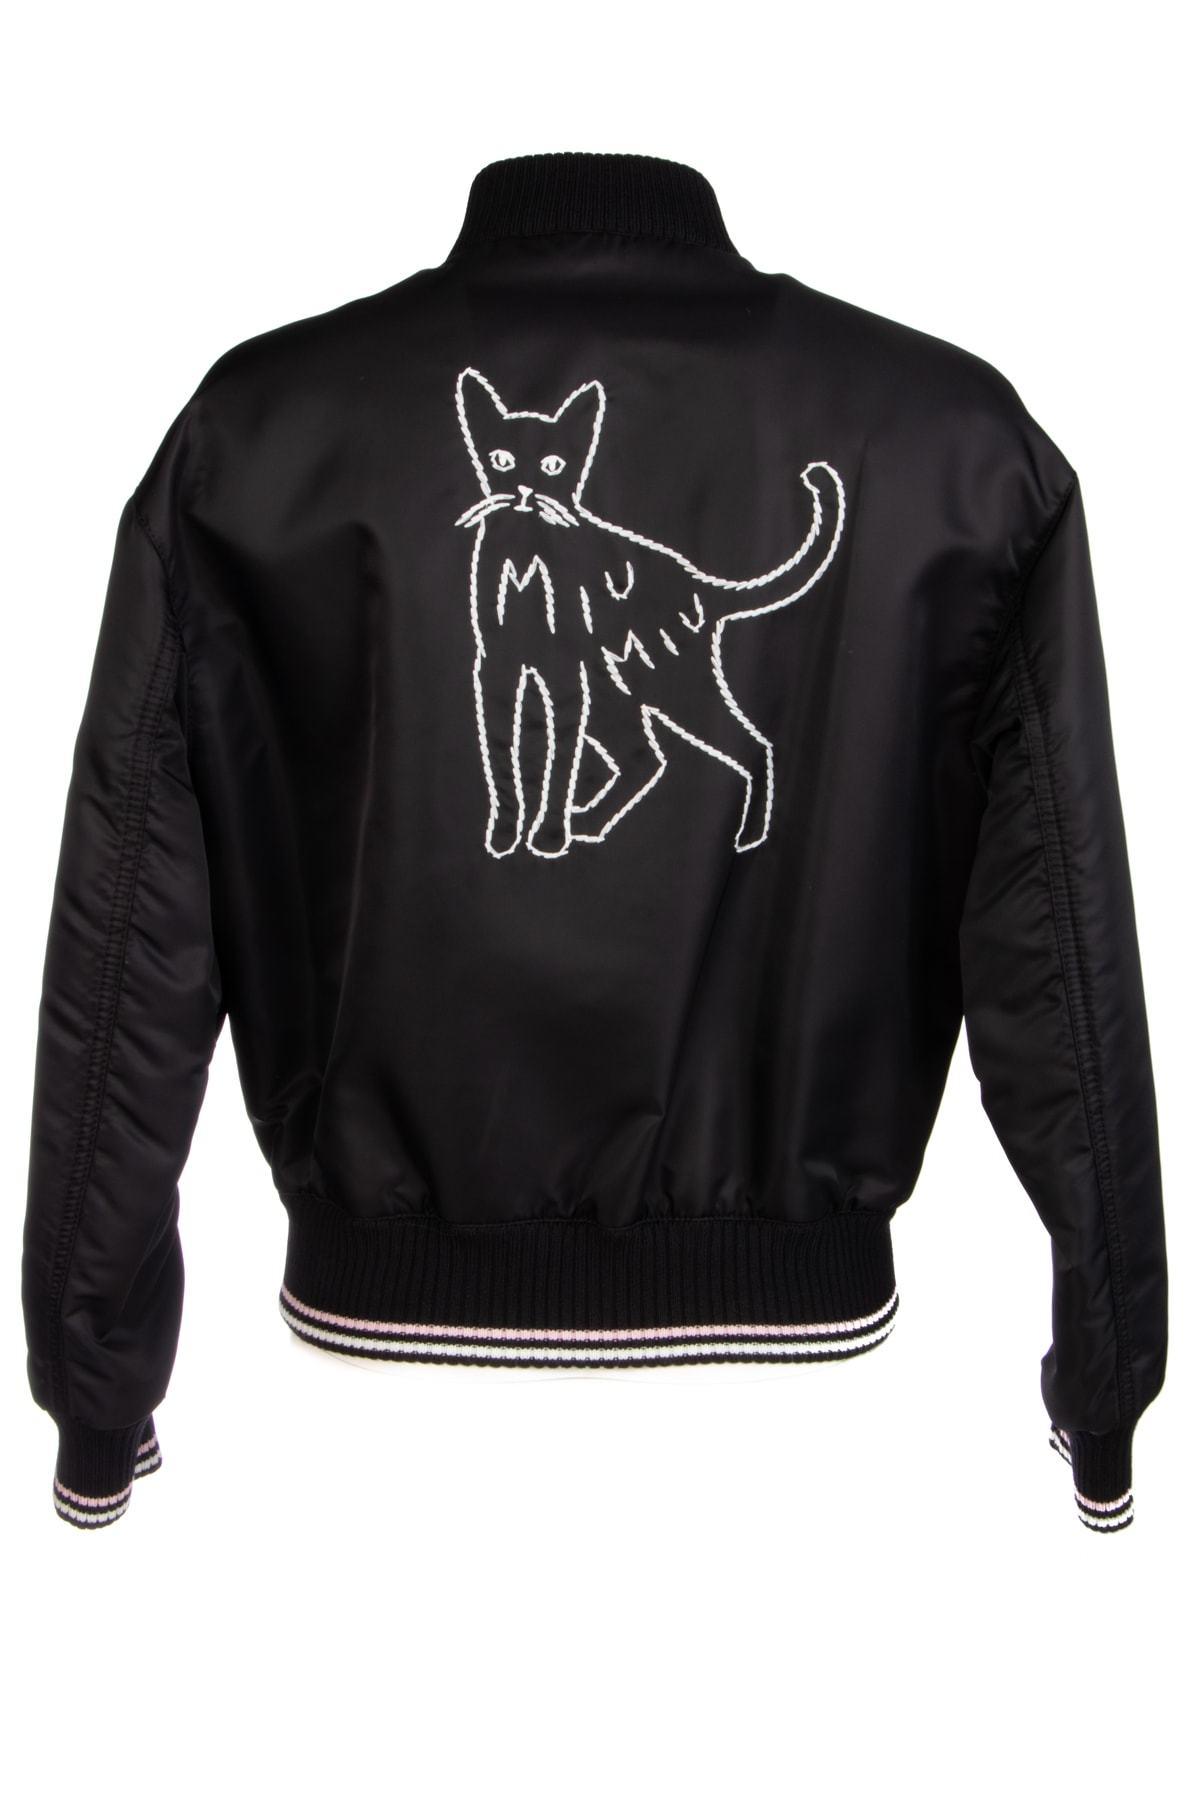 Miu Miu Cat Embroidered Bomber Jacket in Black | Lyst